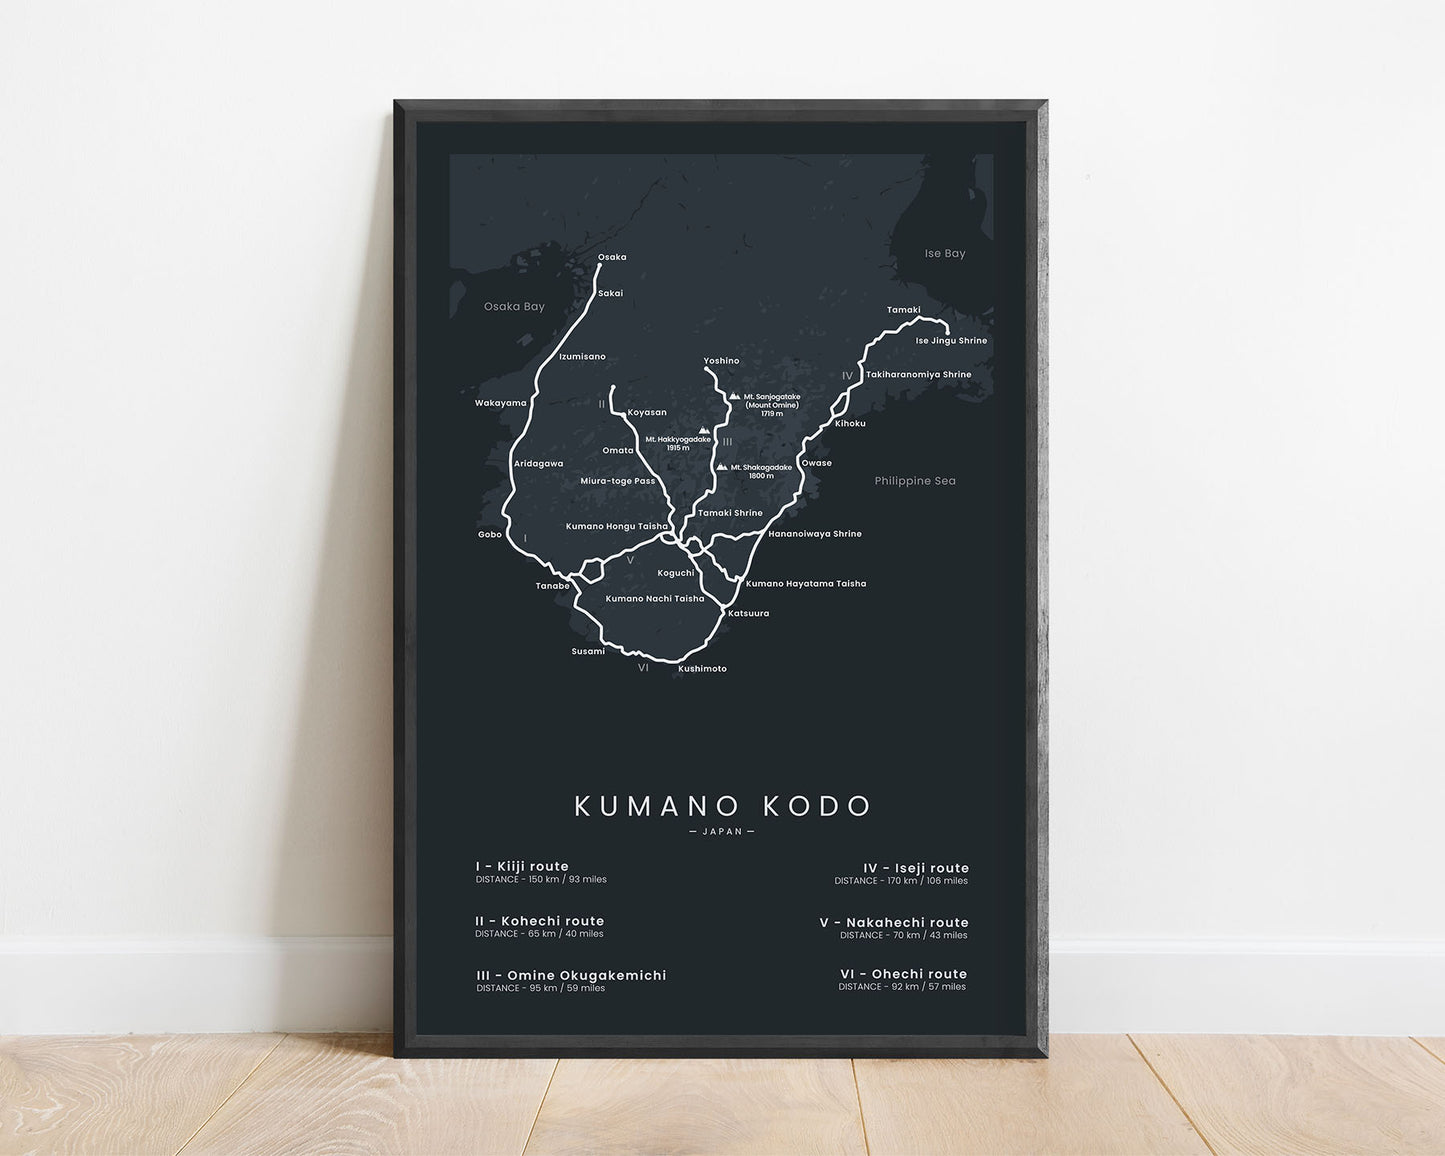 Kumano Kodo (Kiiji route) trail map print with black background